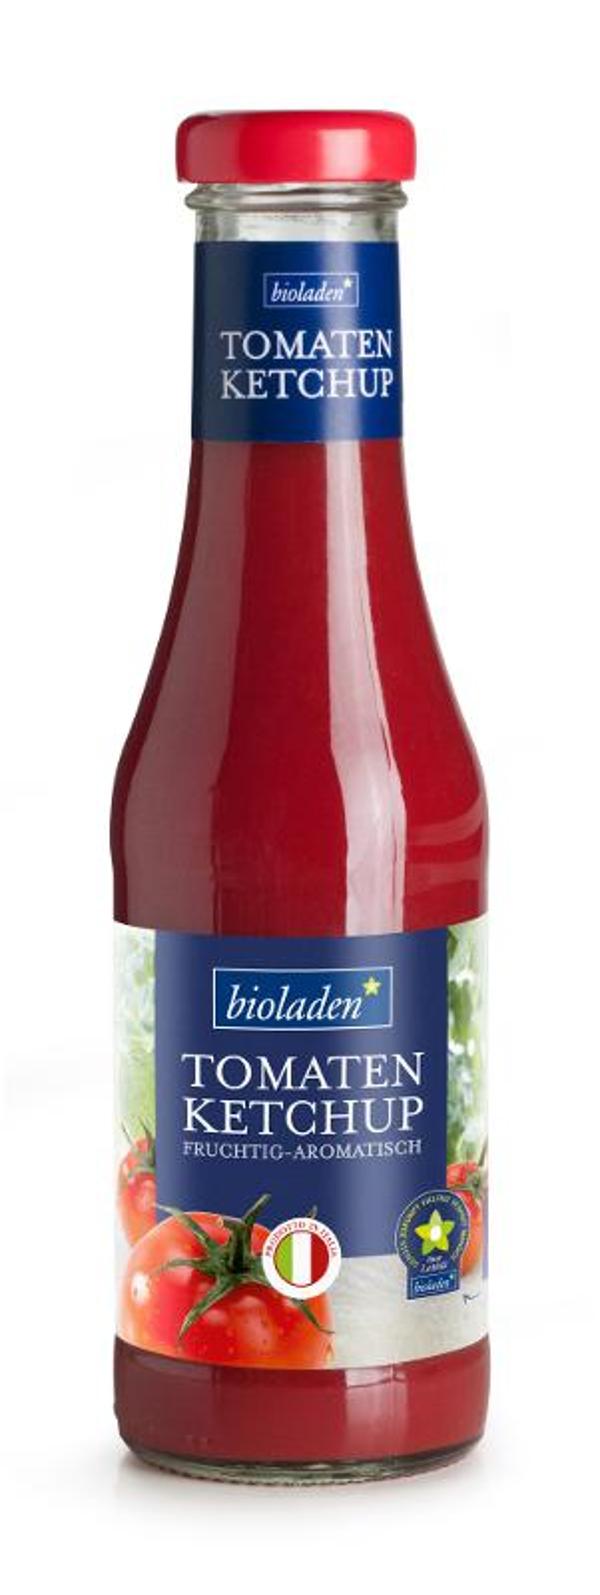 Produktfoto zu Tomatenketchup